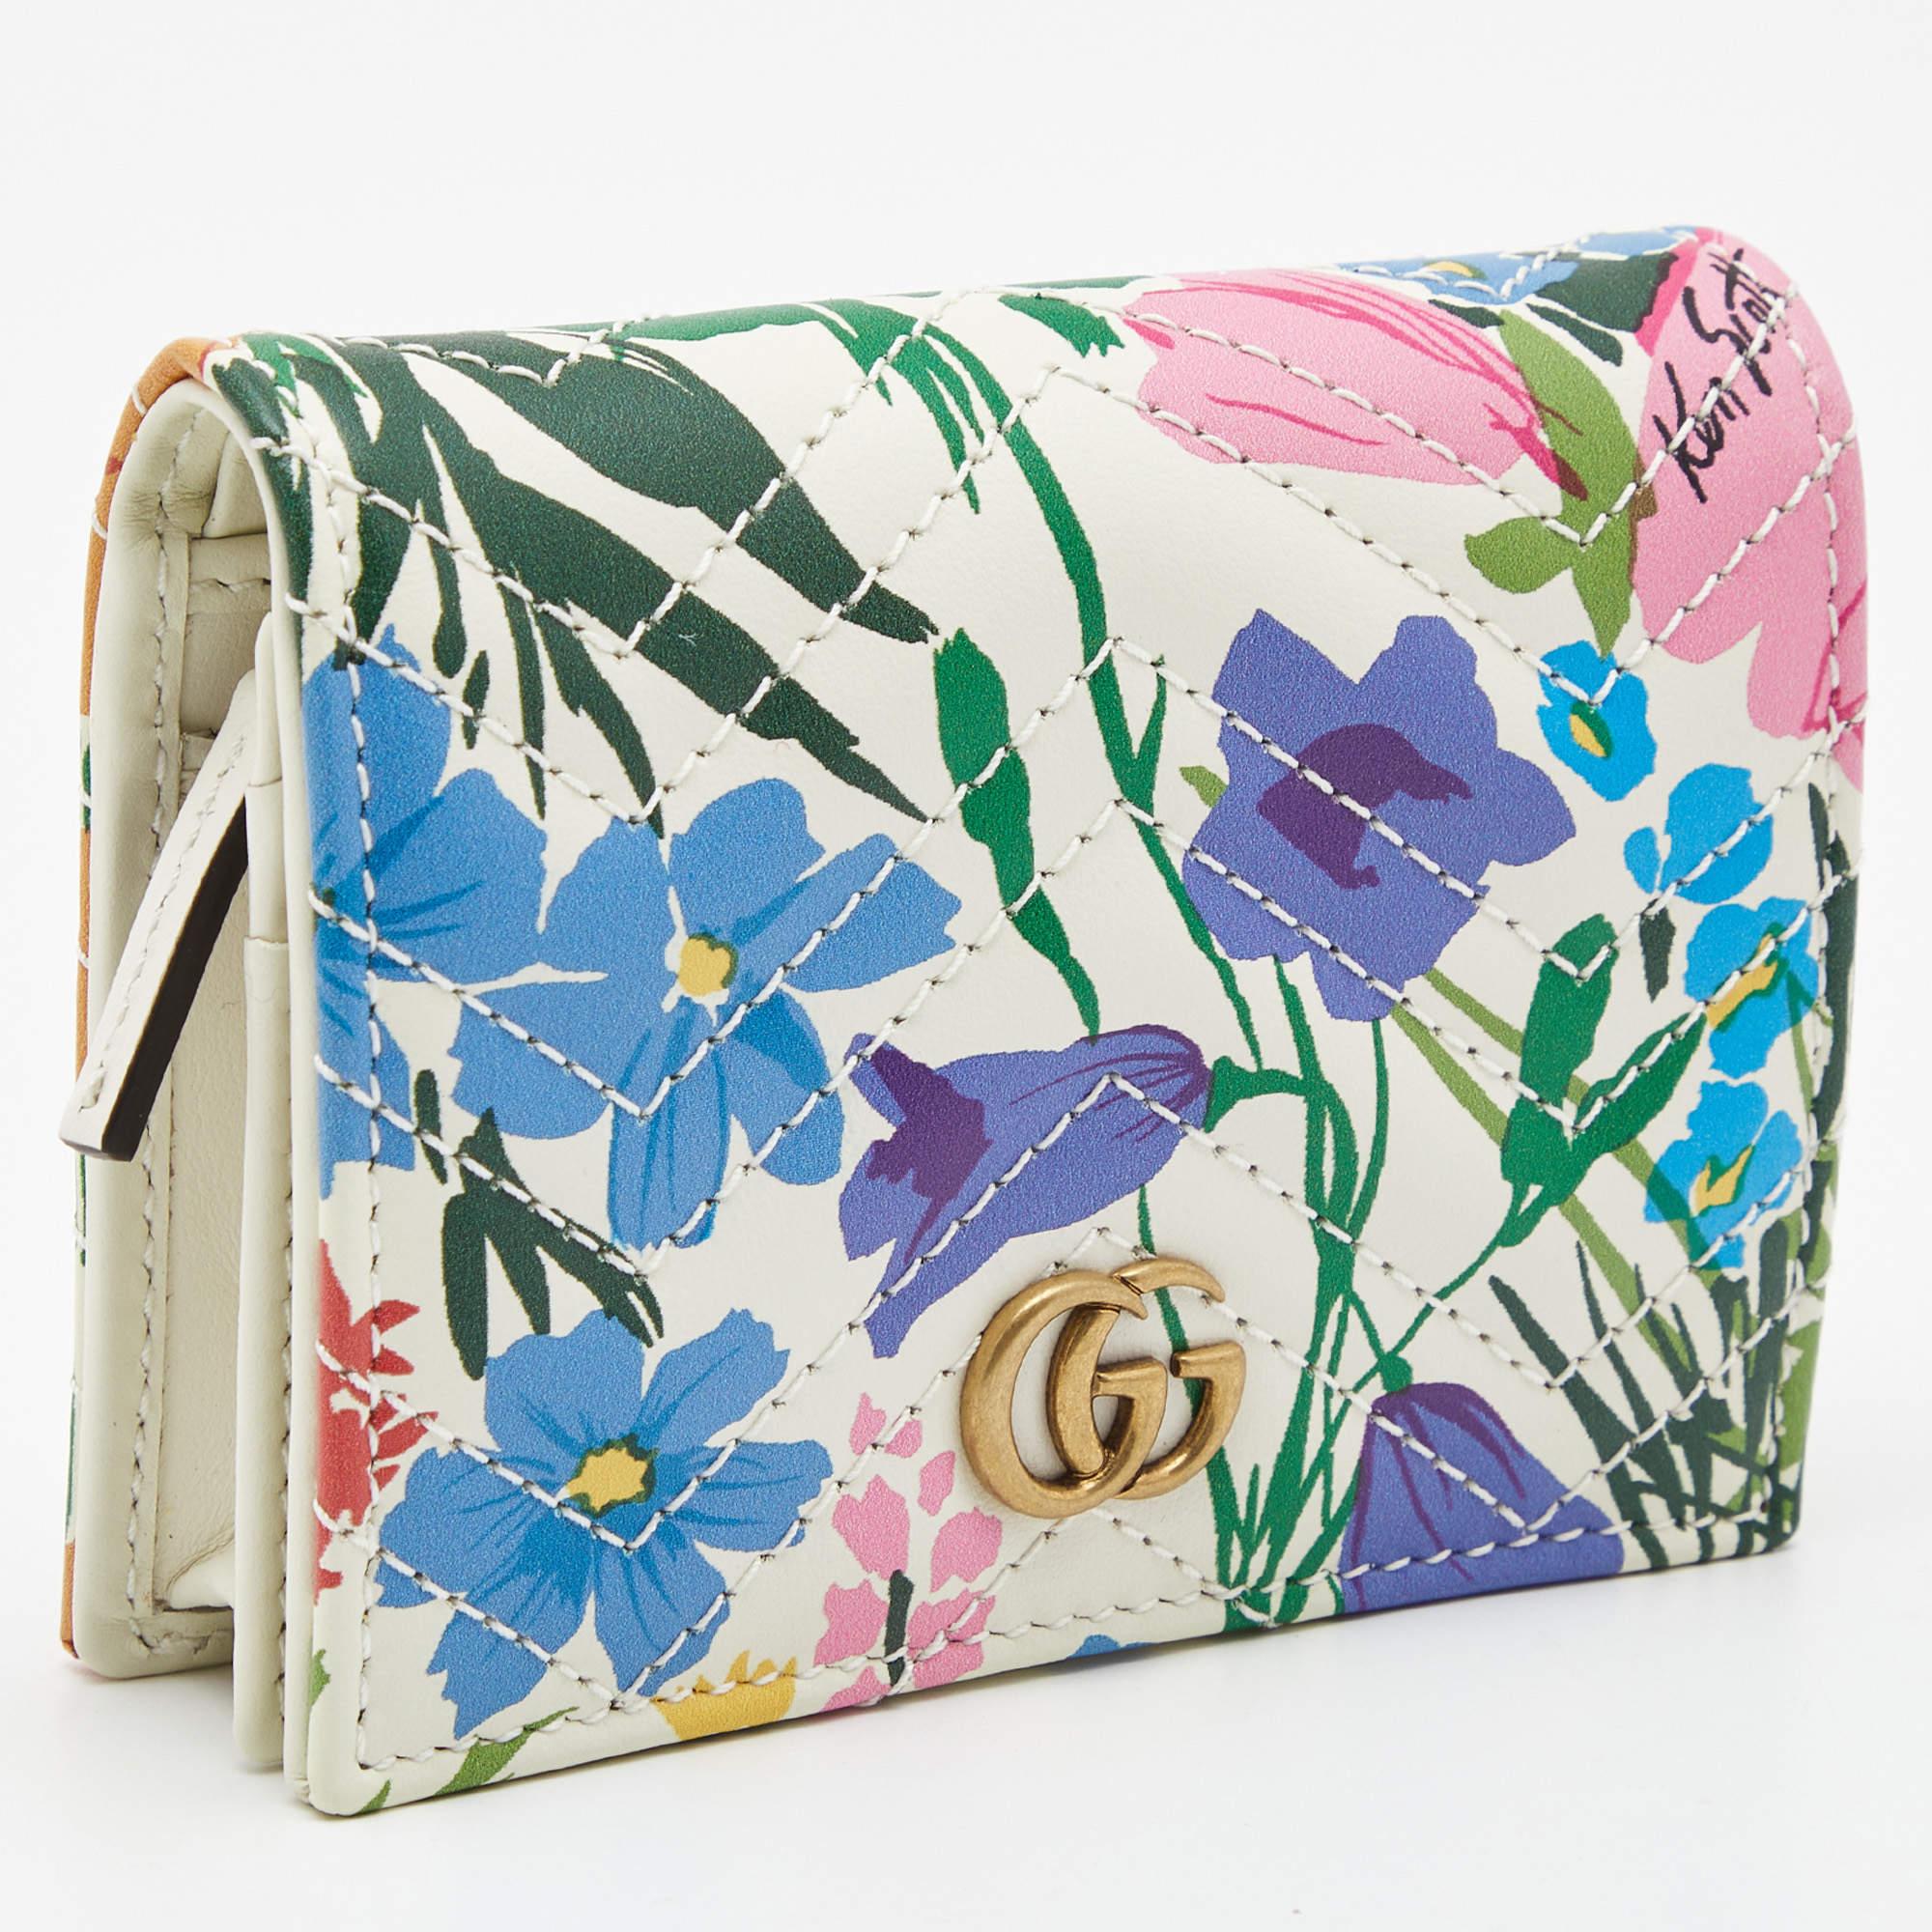 Gucci x Ken Scott Multicolor Floral Print Leather GG Marmont Card Case For Sale 1